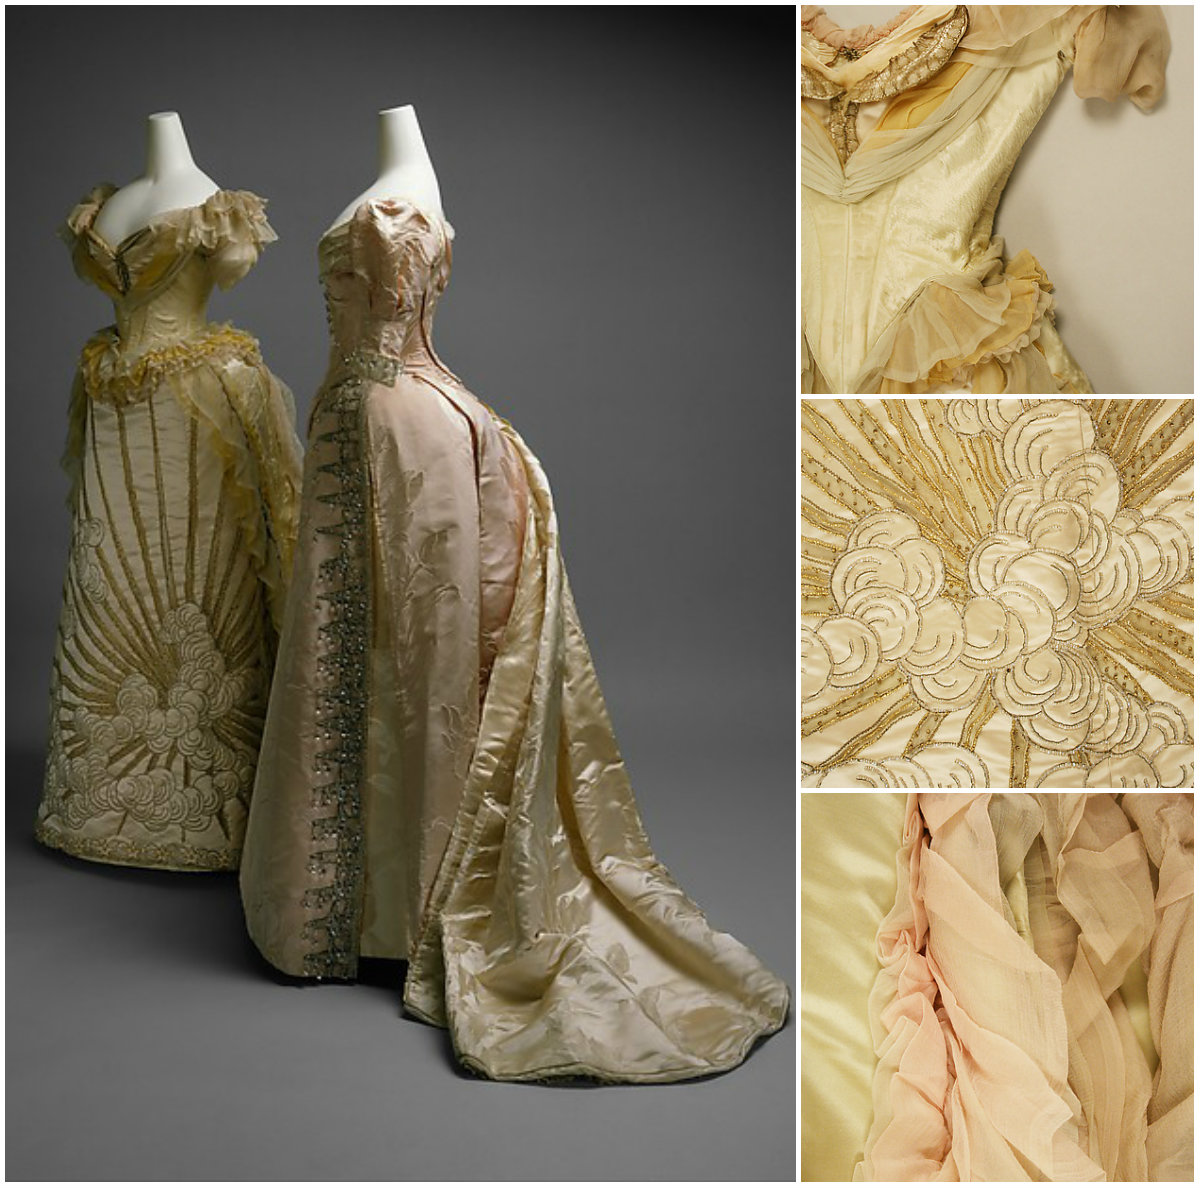 1887. Ball Gown. Silk, glass, metallic thread. metmuseum